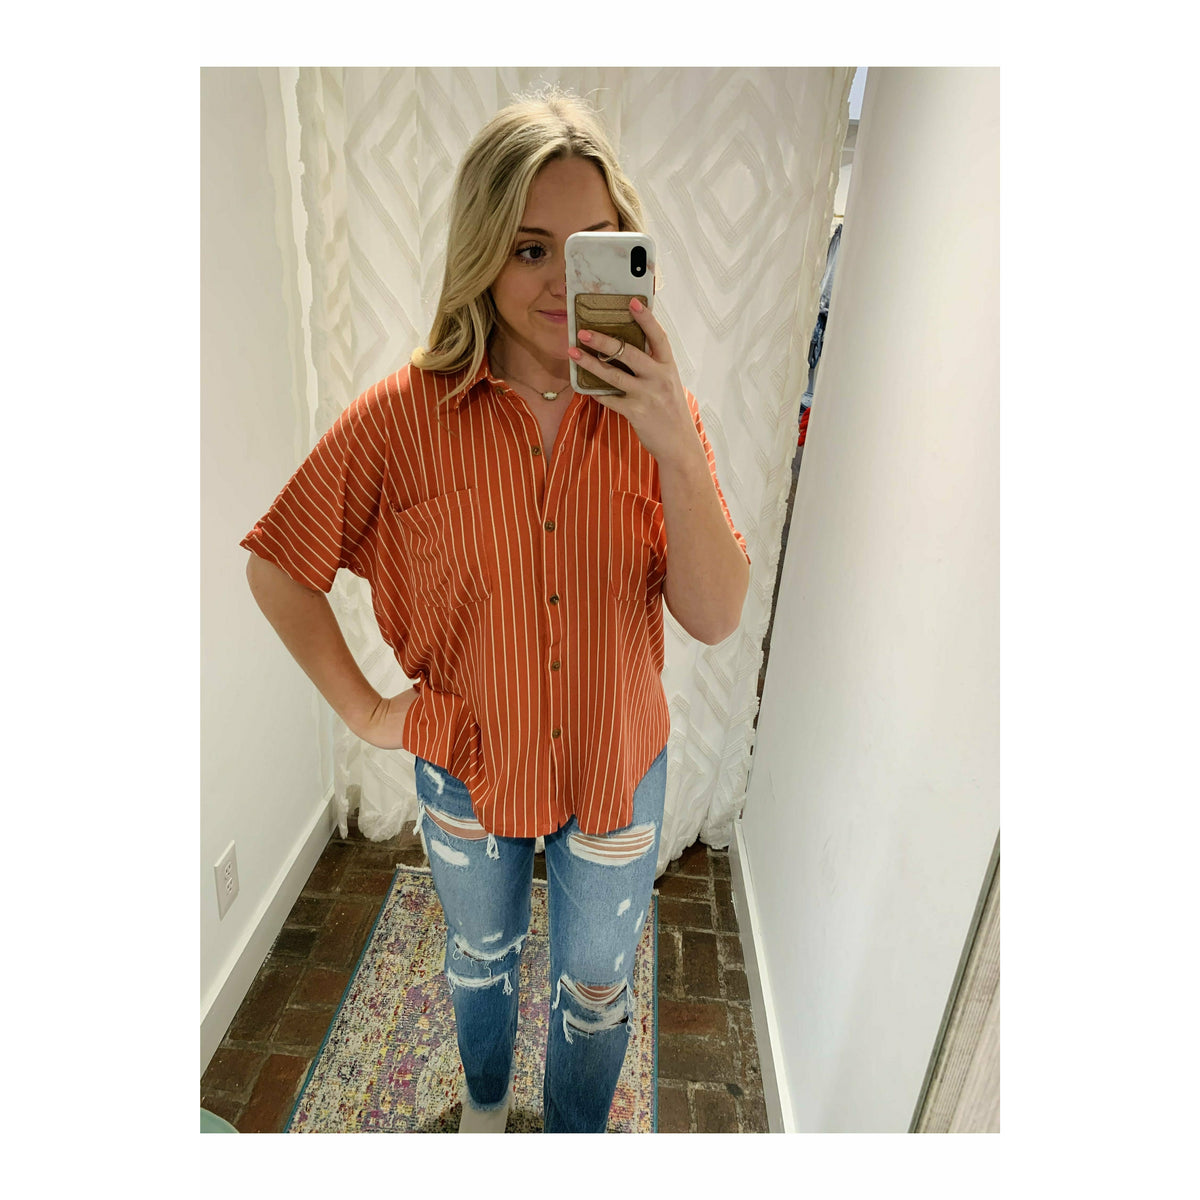 Orange Striped Shirt